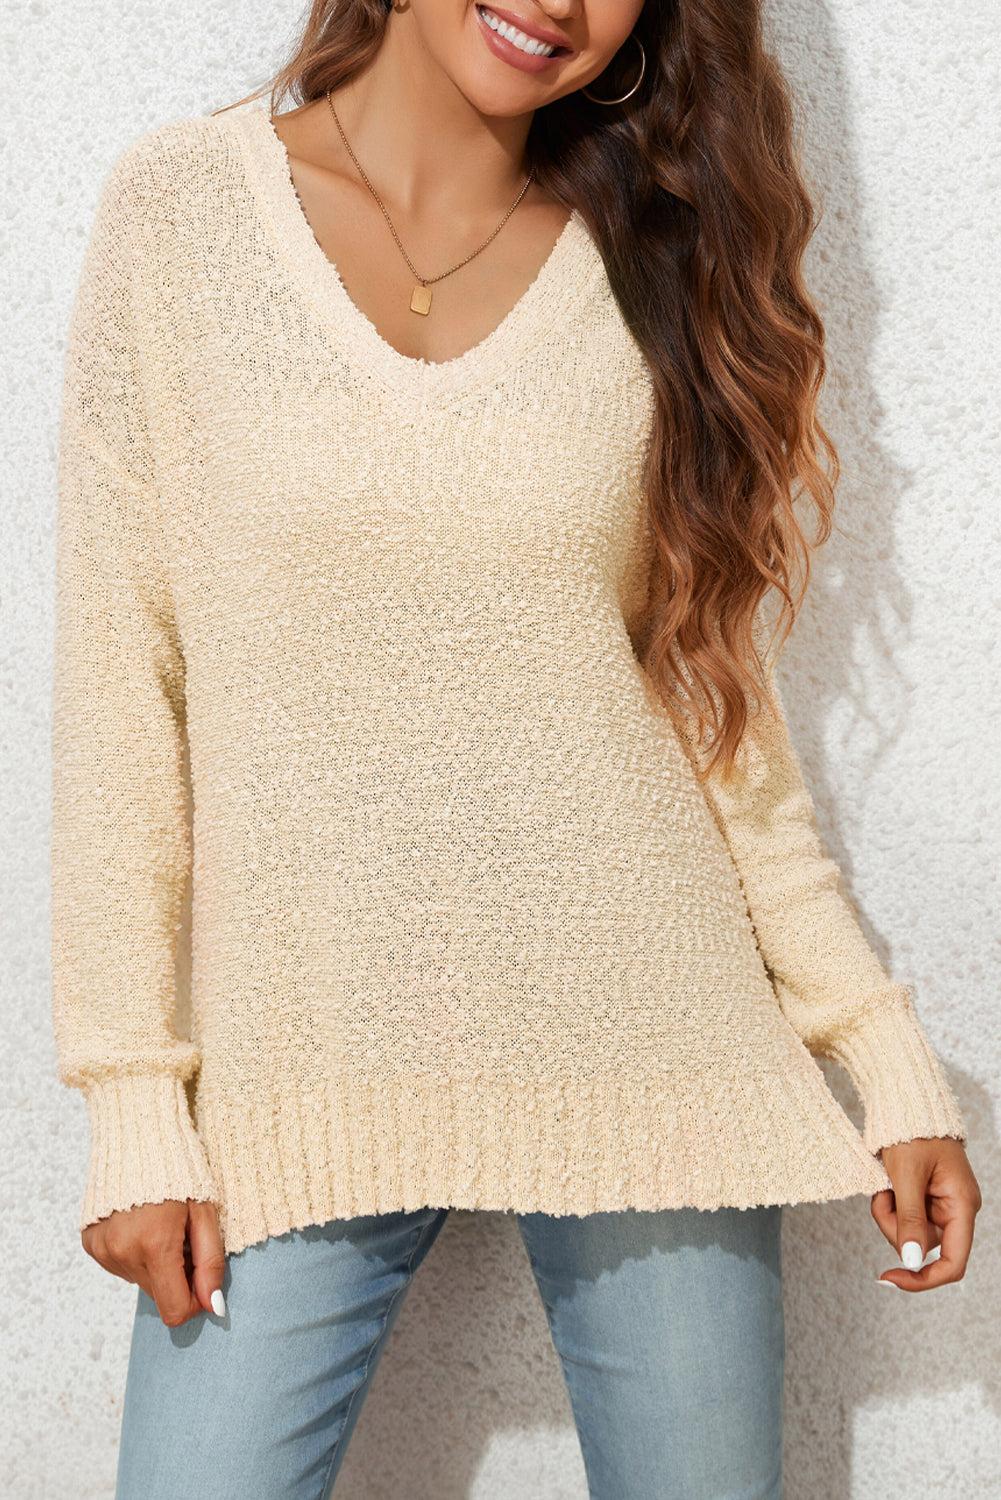 Beige Solid Fuzzy V-Neck Sweater